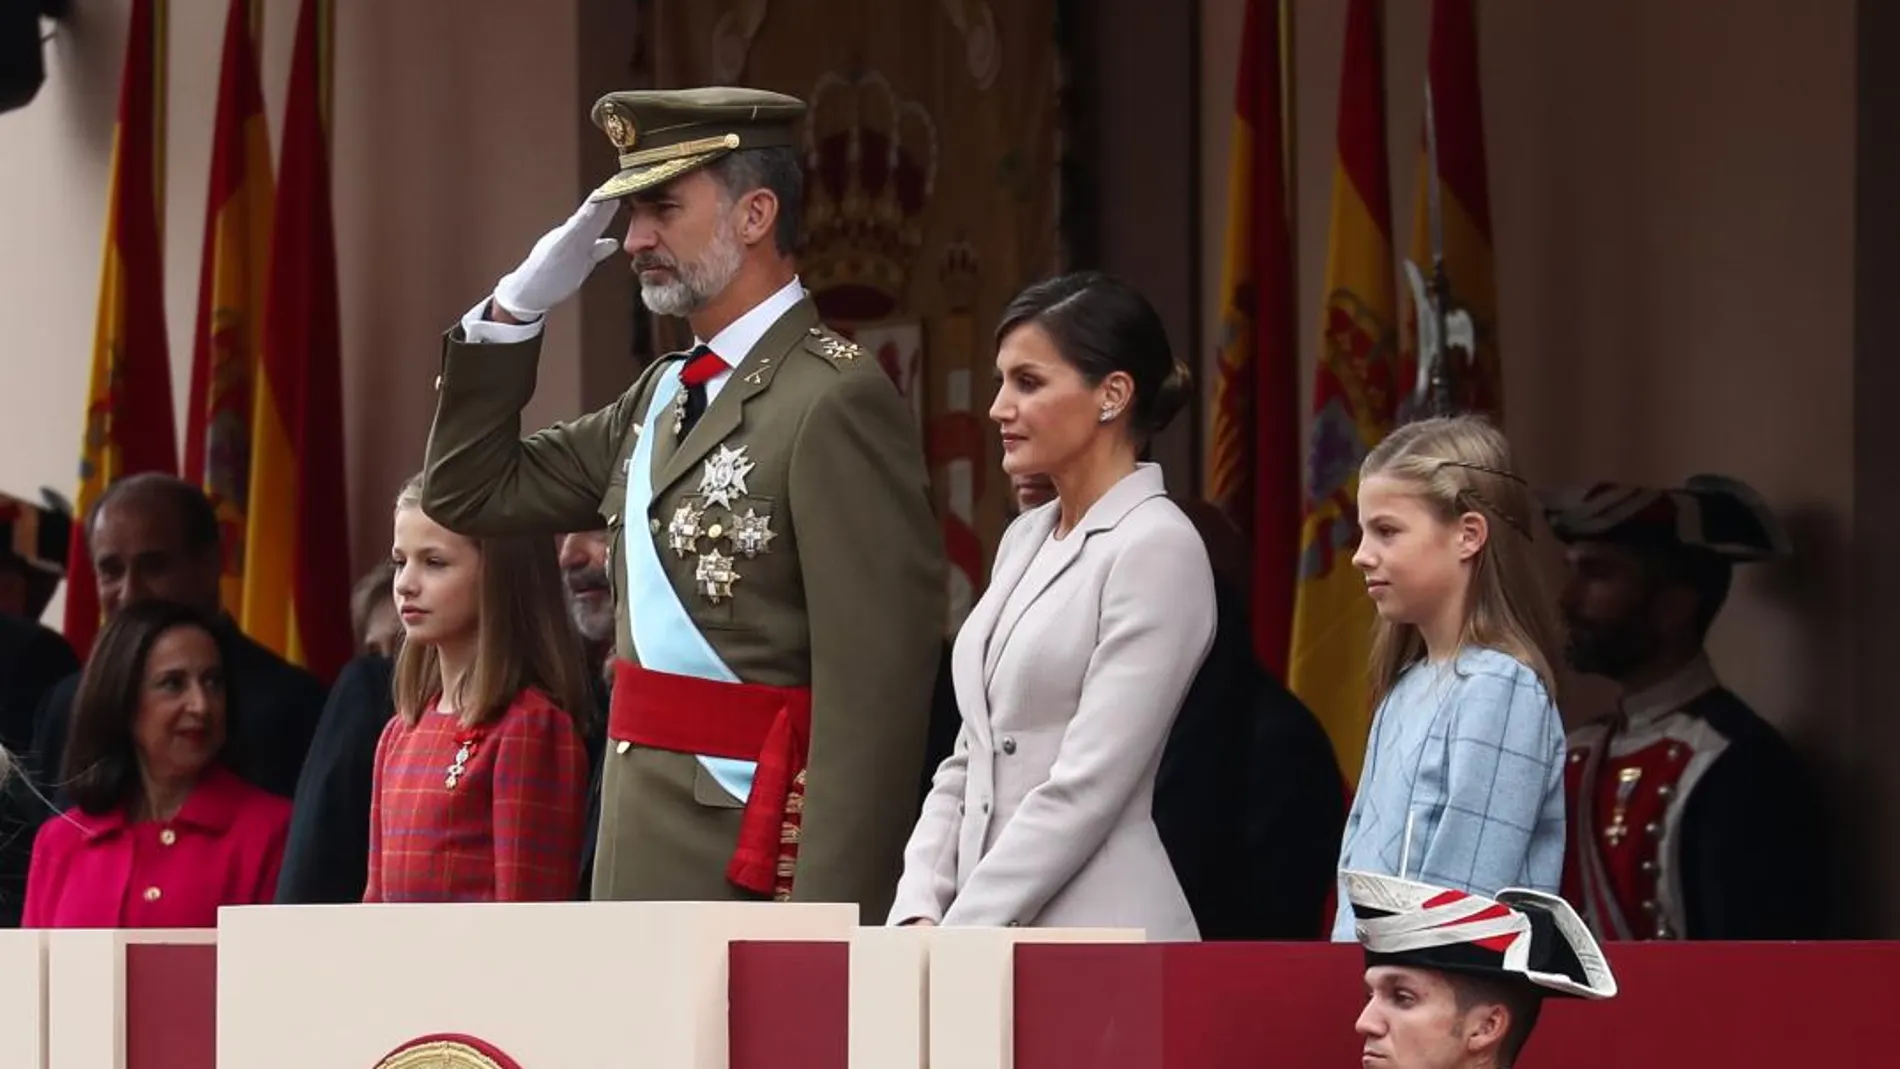 La Princesa Leonor en la tribuna a la derecha de su padre.